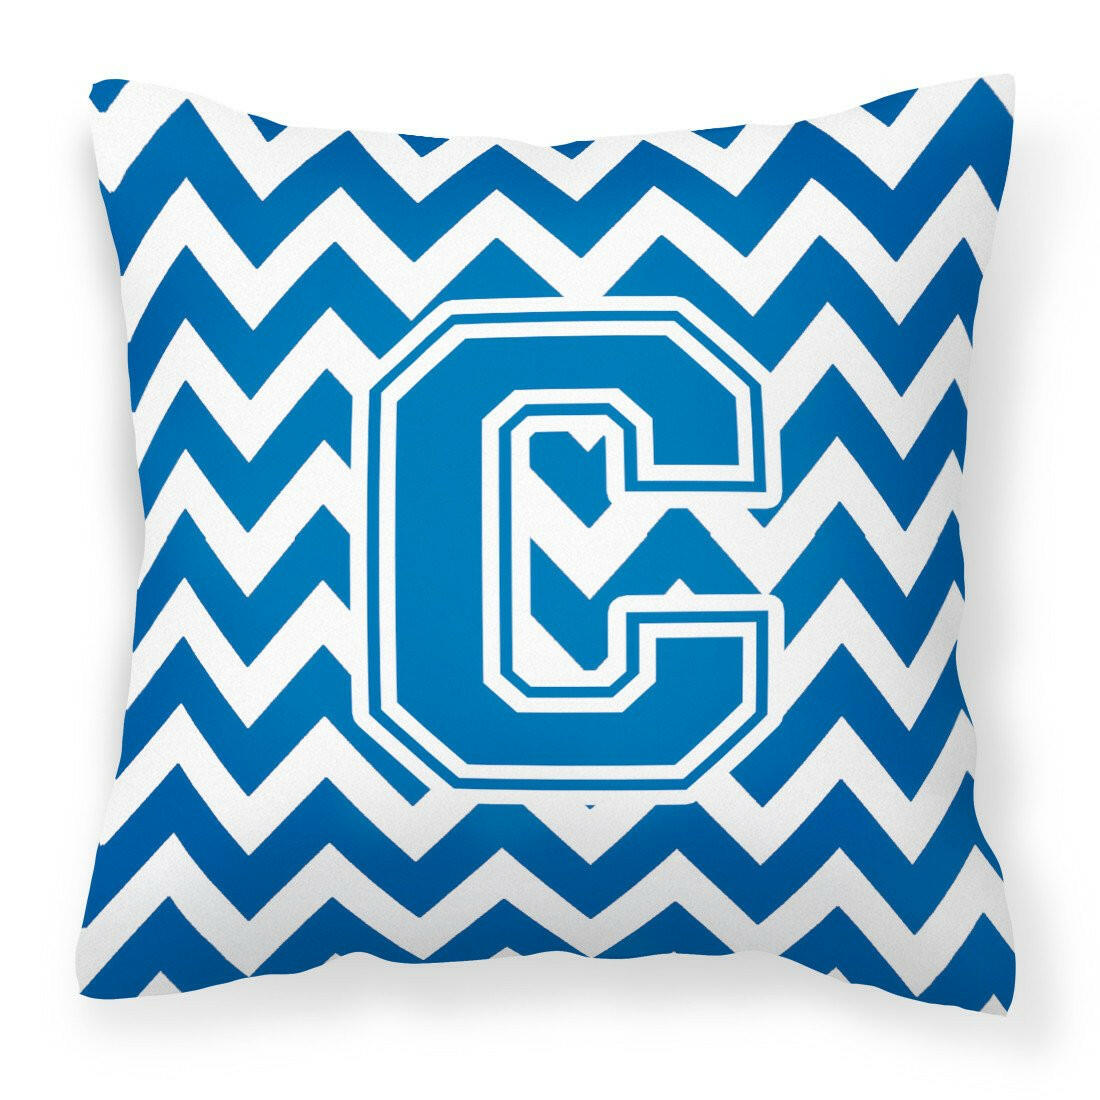 Letter C Chevron Blue and White Fabric Decorative Pillow CJ1056-CPW1414 by Caroline's Treasures